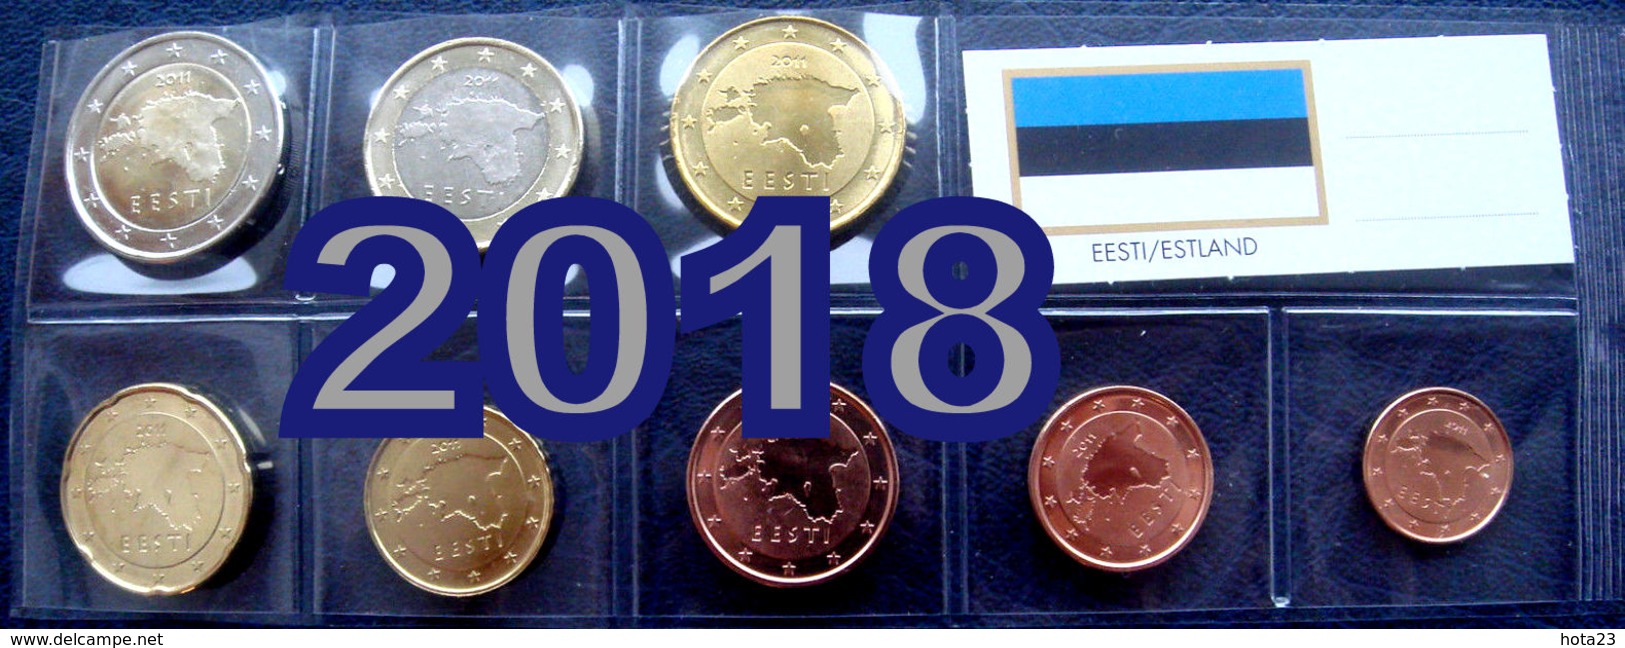 2018 ESTLAND , ESTONIA Münzen 1 Cent - 2 Euro 3,88 Eiro 2018 COINS UNZ / UNC - Estland